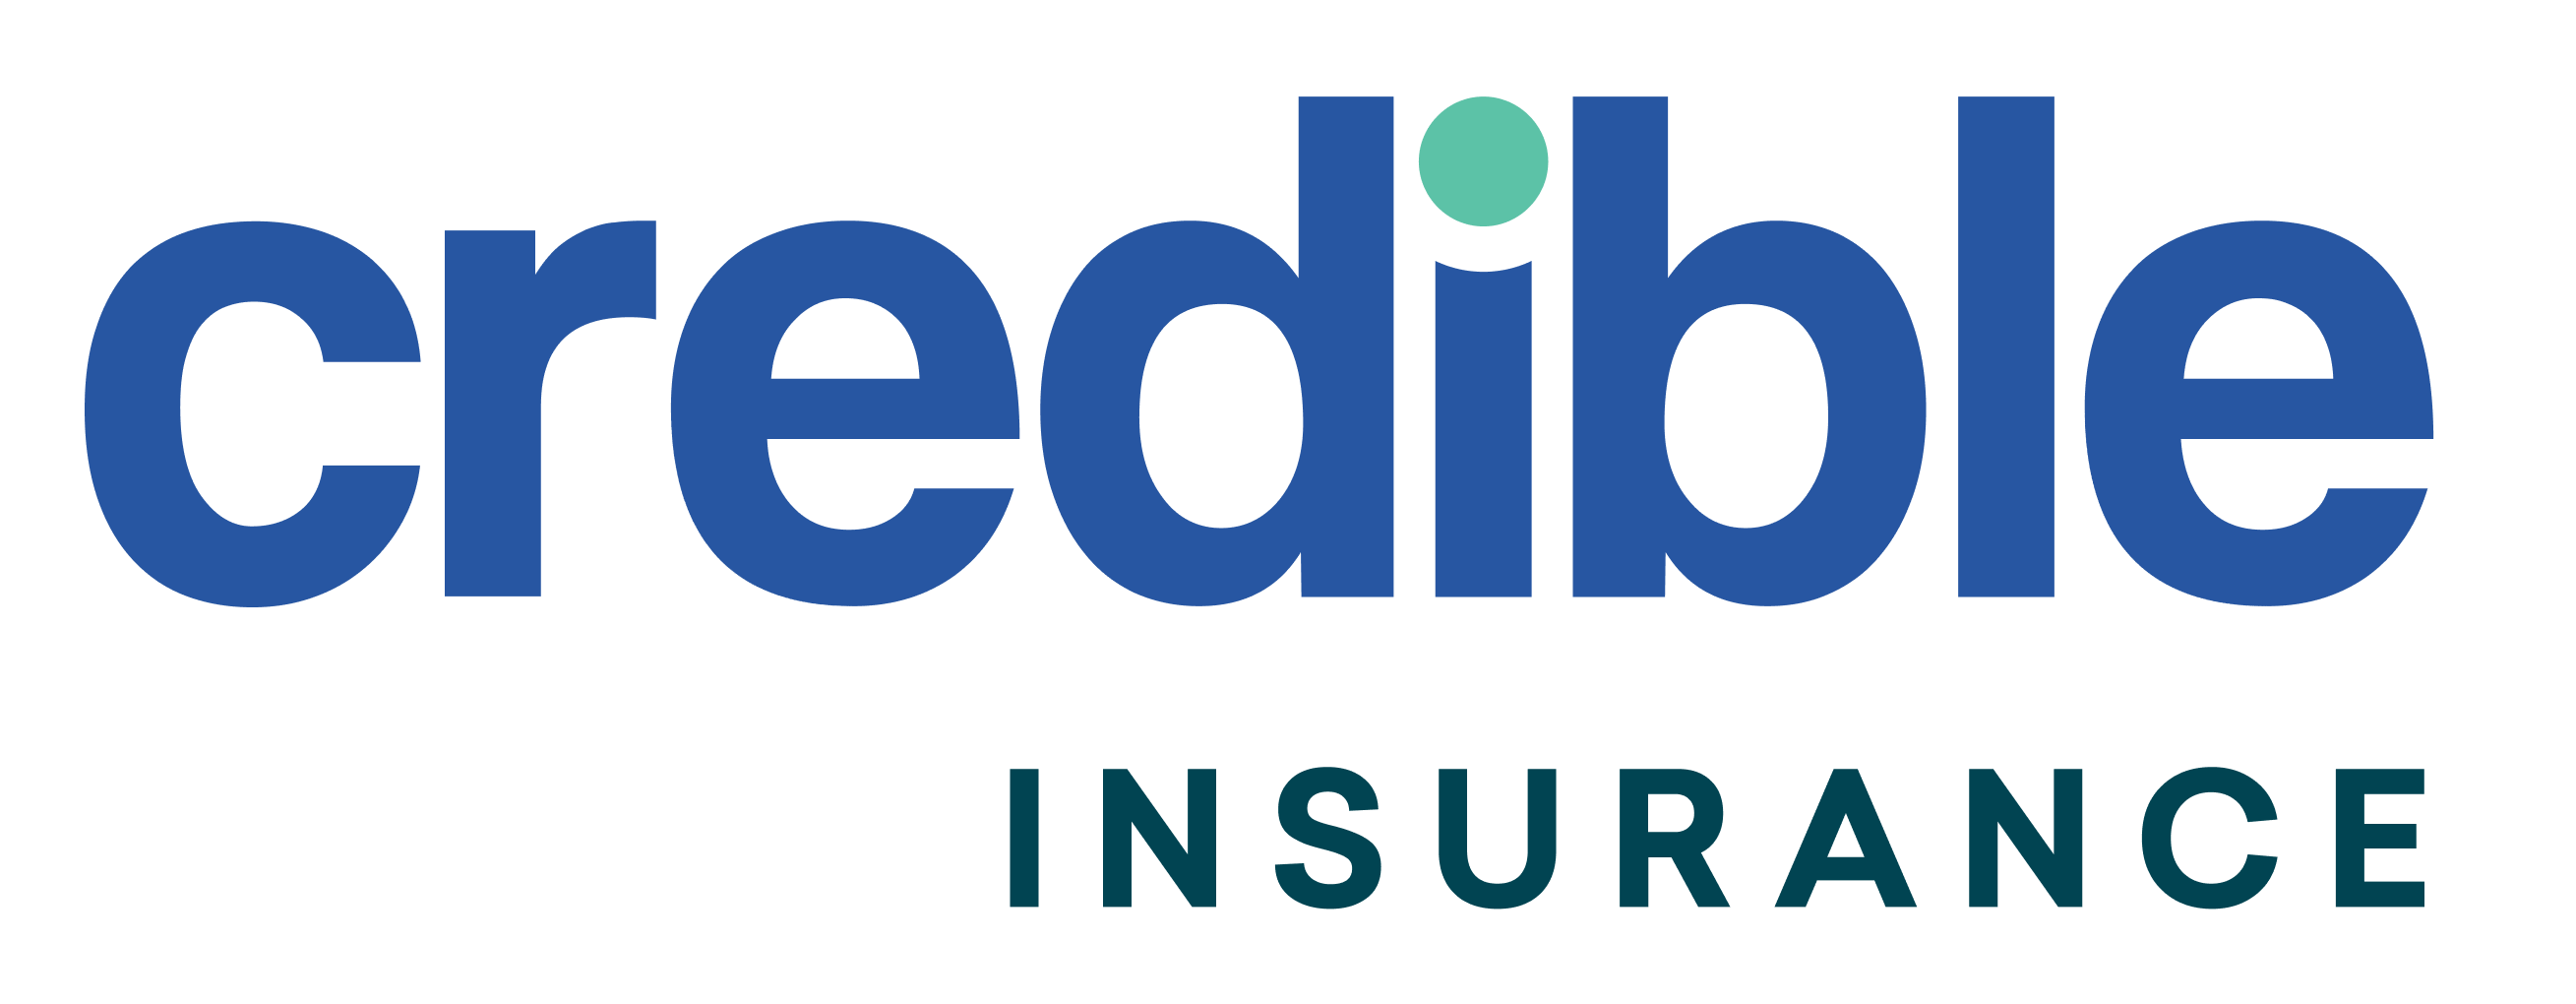 Credible insurance